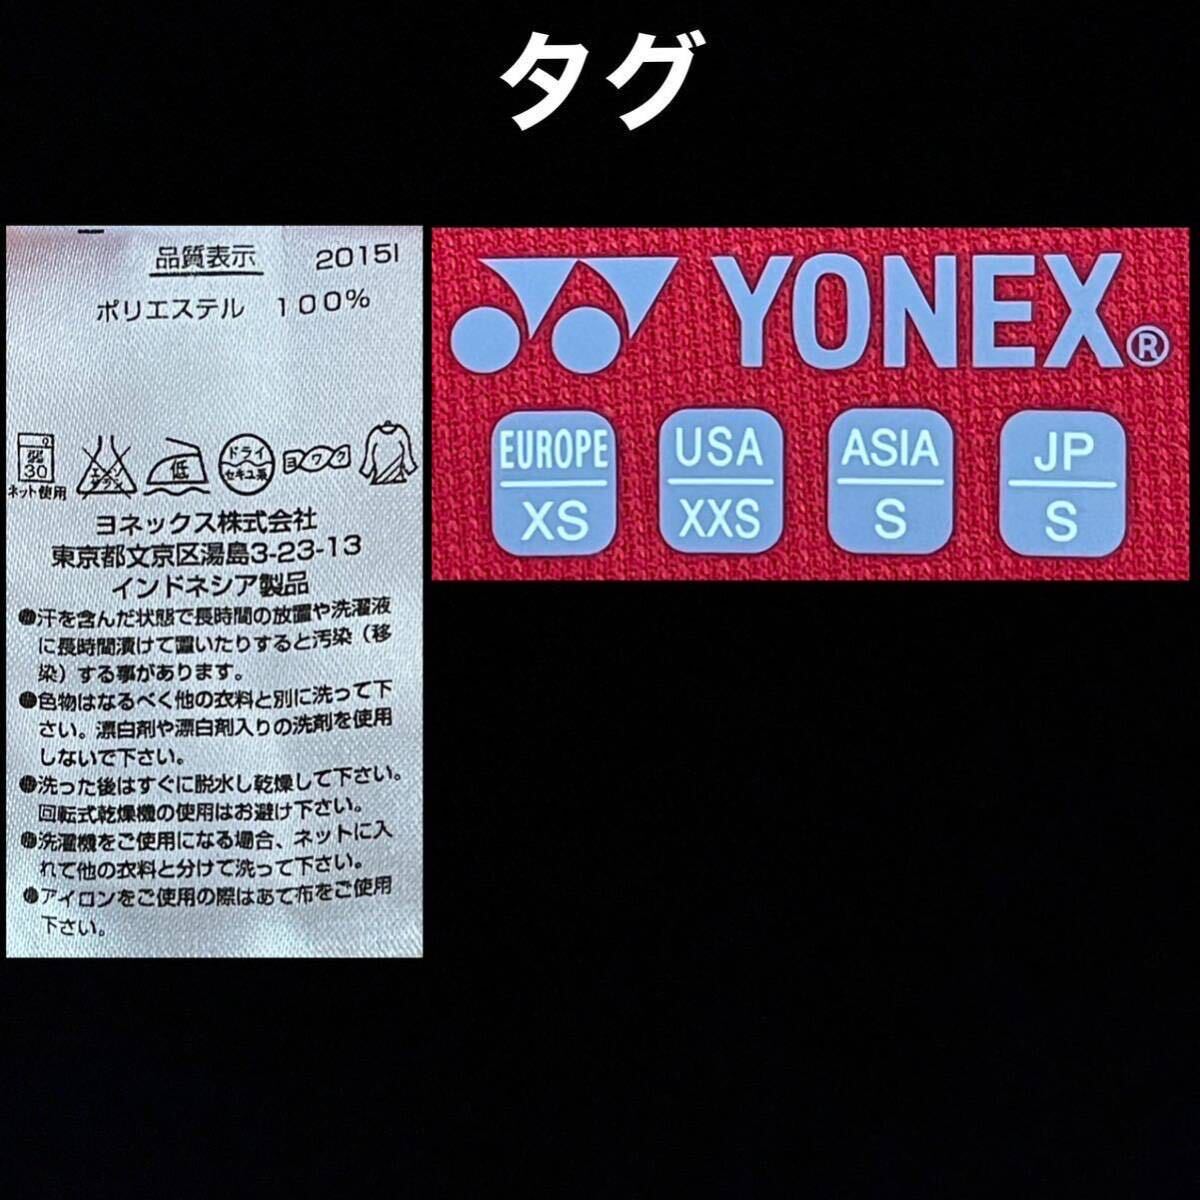  super-beauty goods YONEX( Yonex ) men's shirt S(T165.B85cm) red use 2 times long sleeve dry Golf badminton ping-pong tennis sport outdoor 